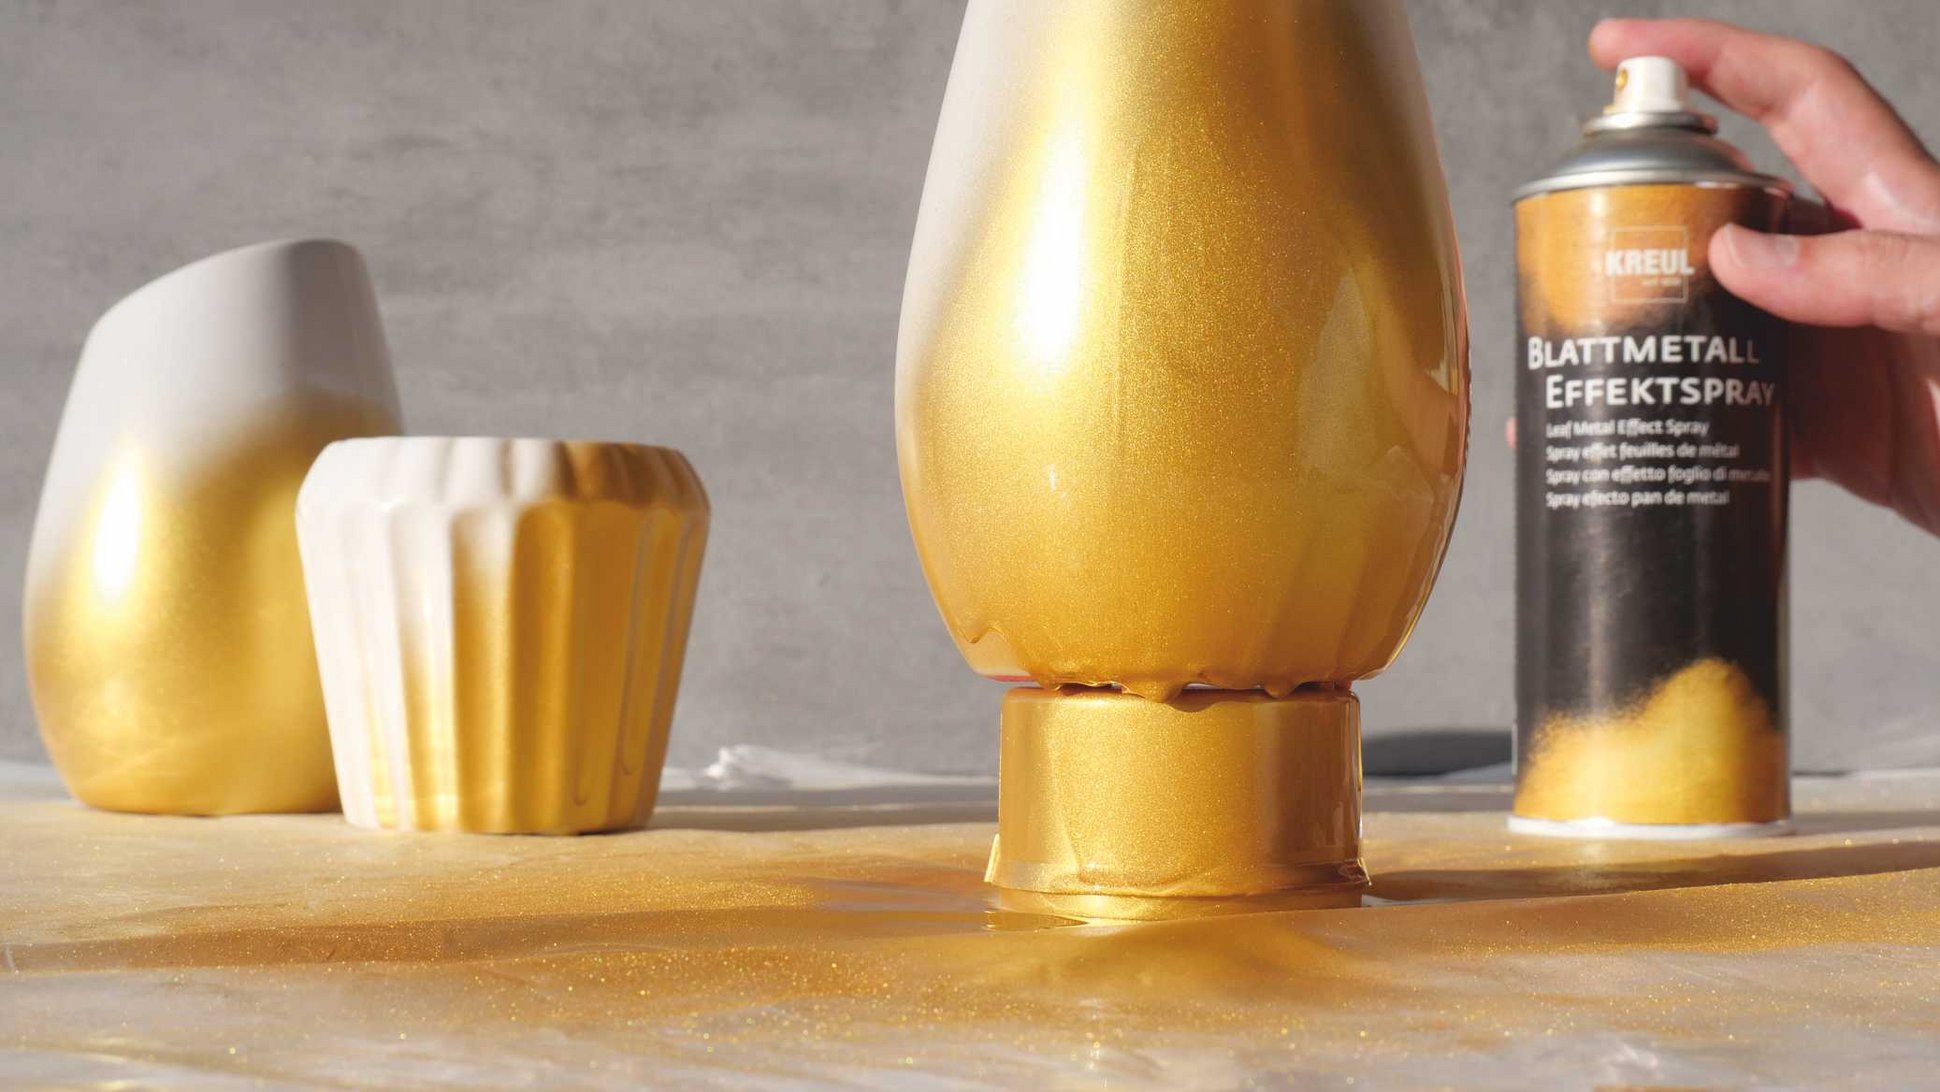 KREUL Blattmetall Effektspray gold Farbe sprühen DIY